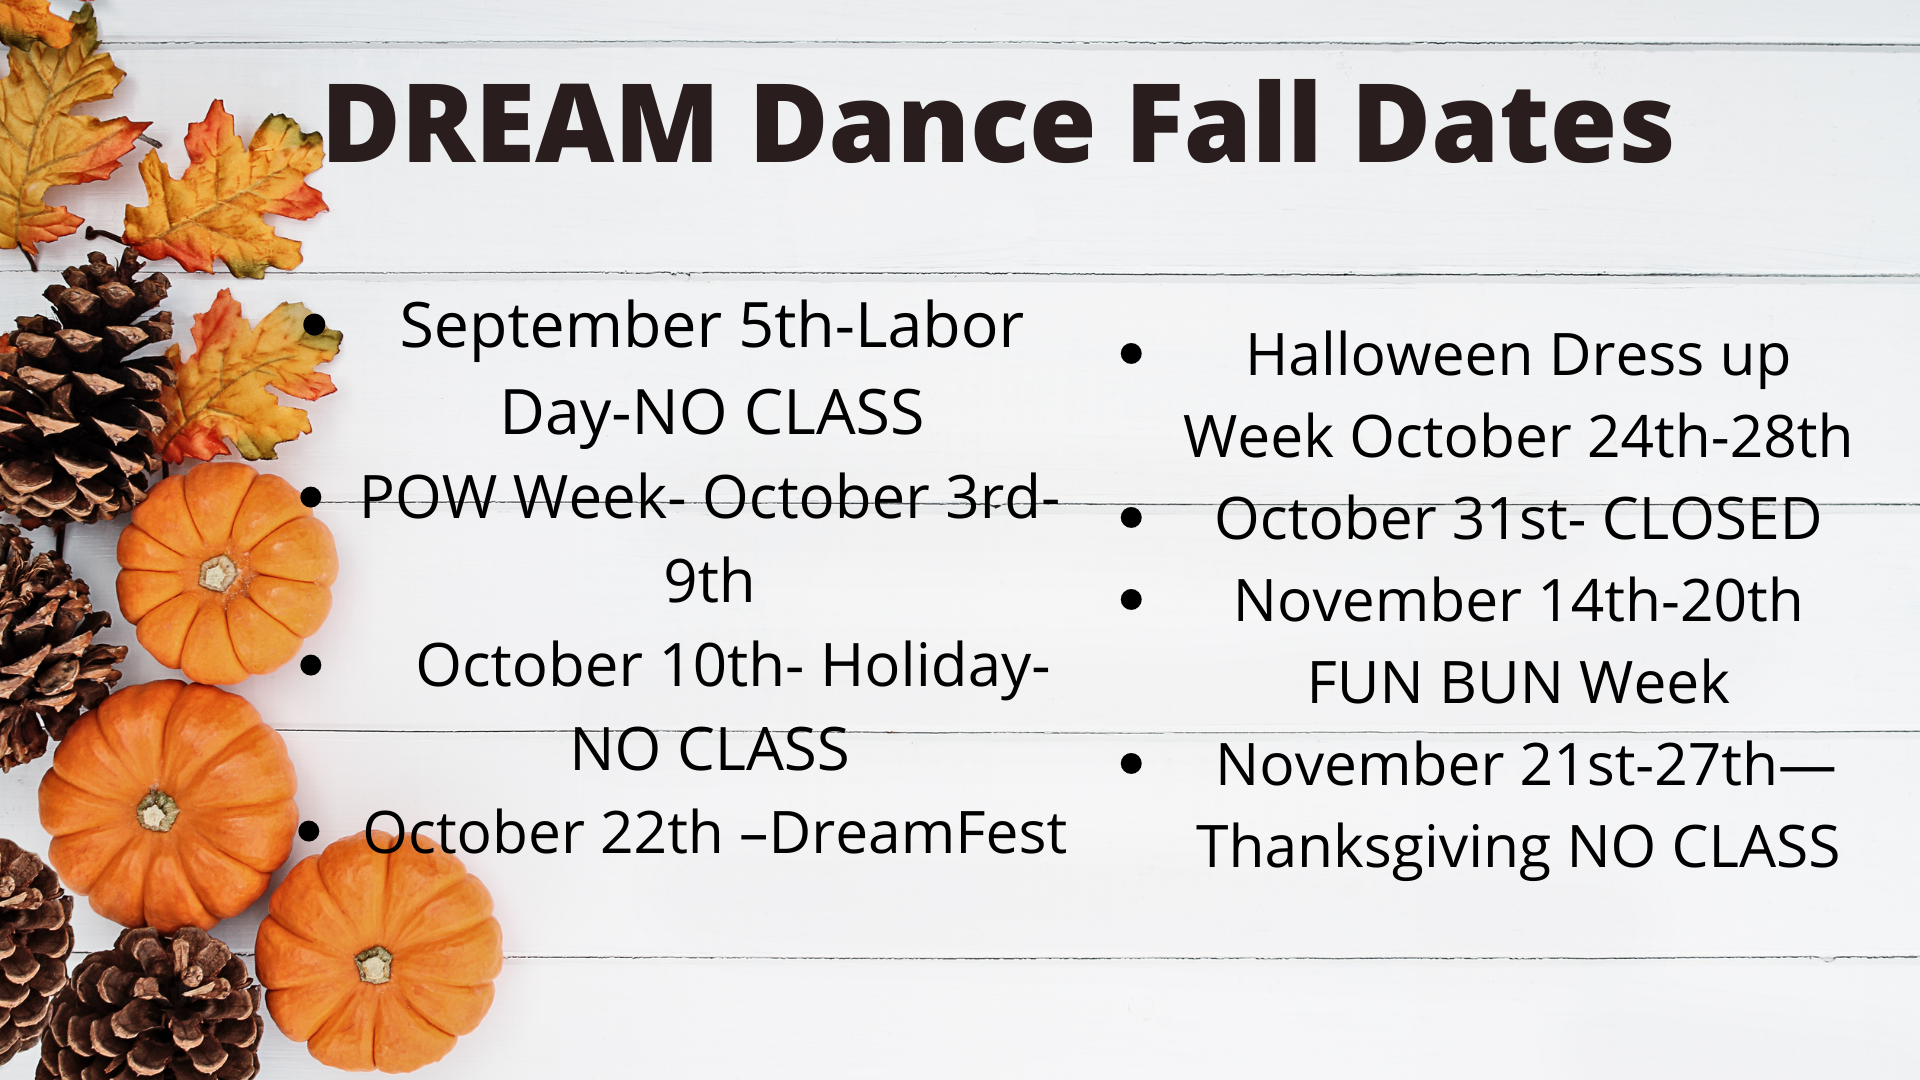 DREAM Dance Important Dates (2)